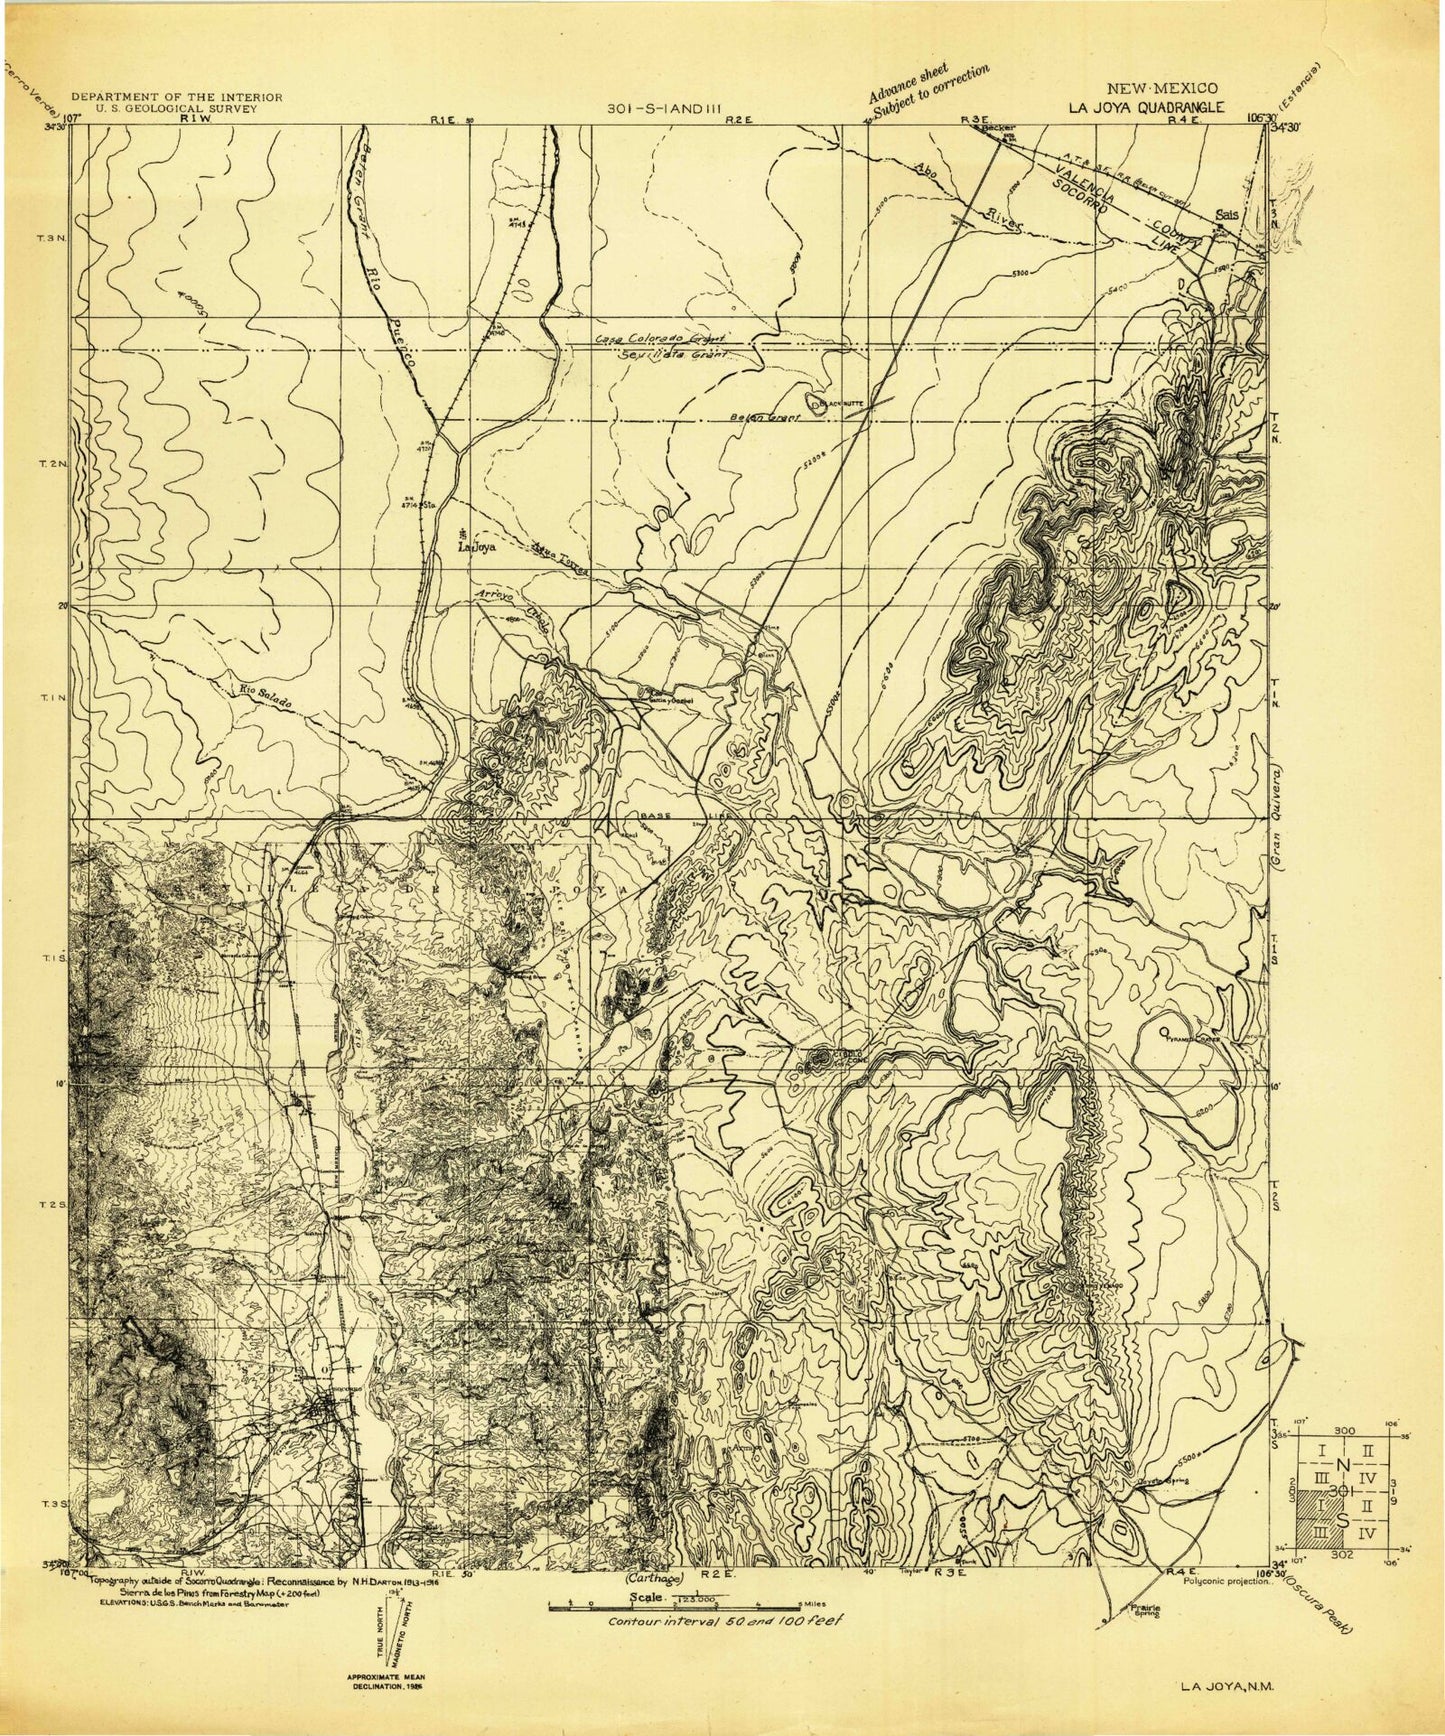 Historic 1916 La Joya New Mexico 30'x30' Topo Map Image